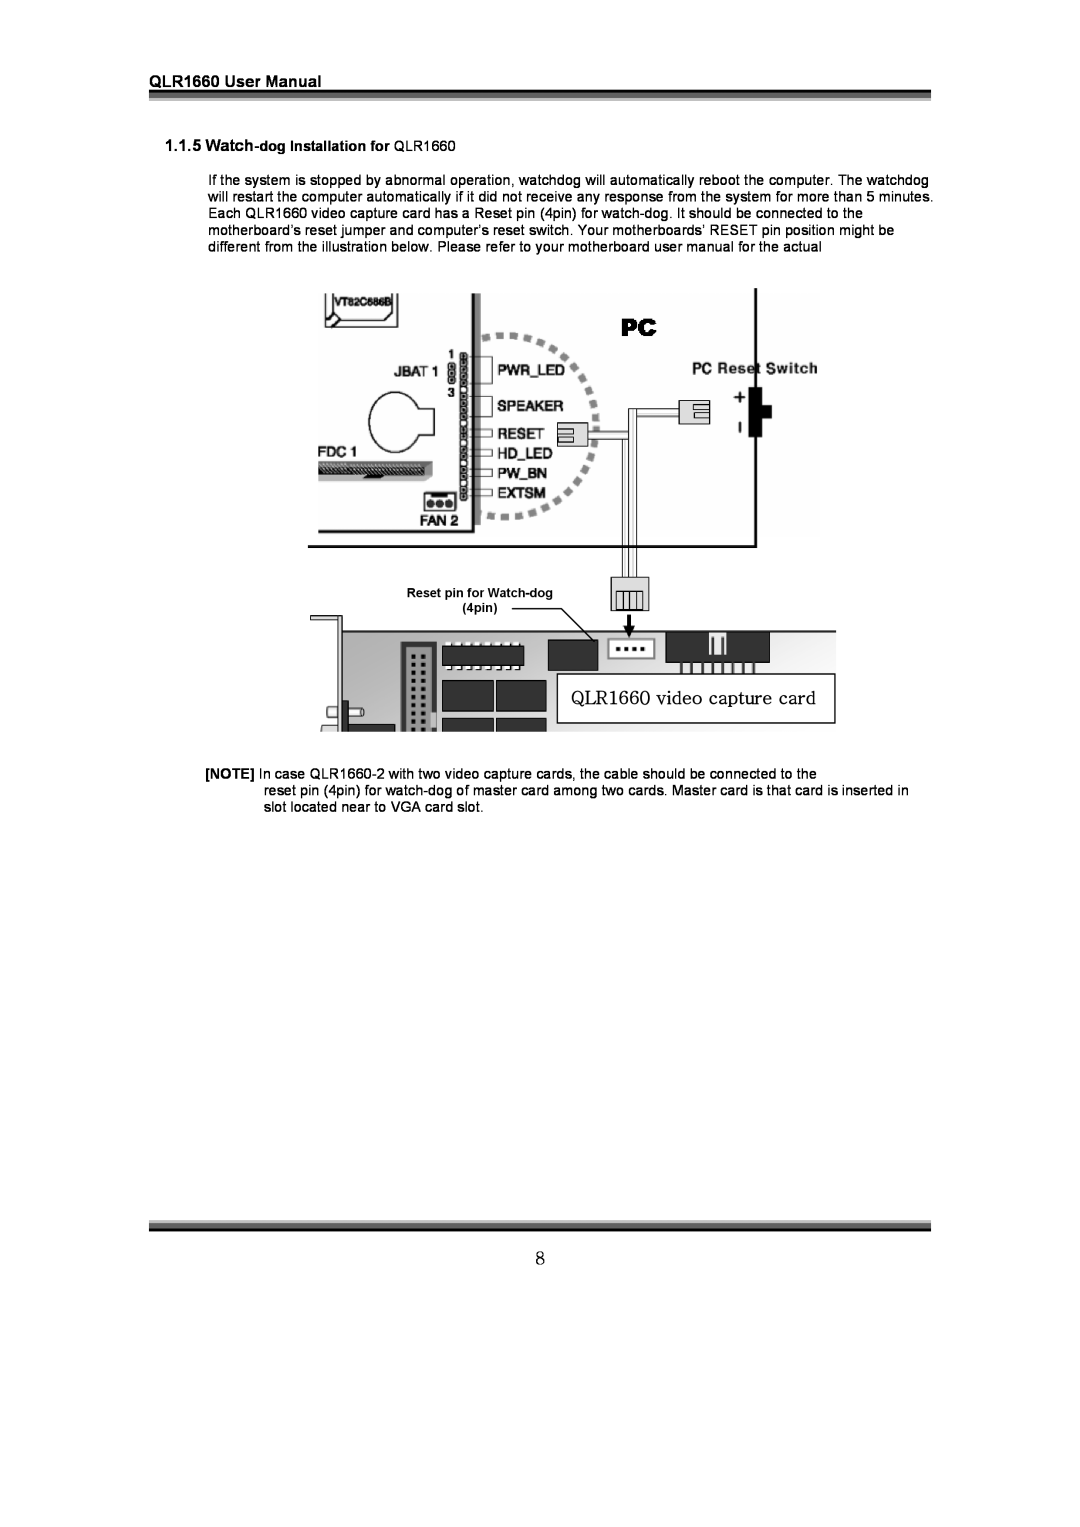 LOREX Technology QLR1660 video capture card, 1.1.5Watch-dogInstallation for QLR1660, QLR1660 User Manual 